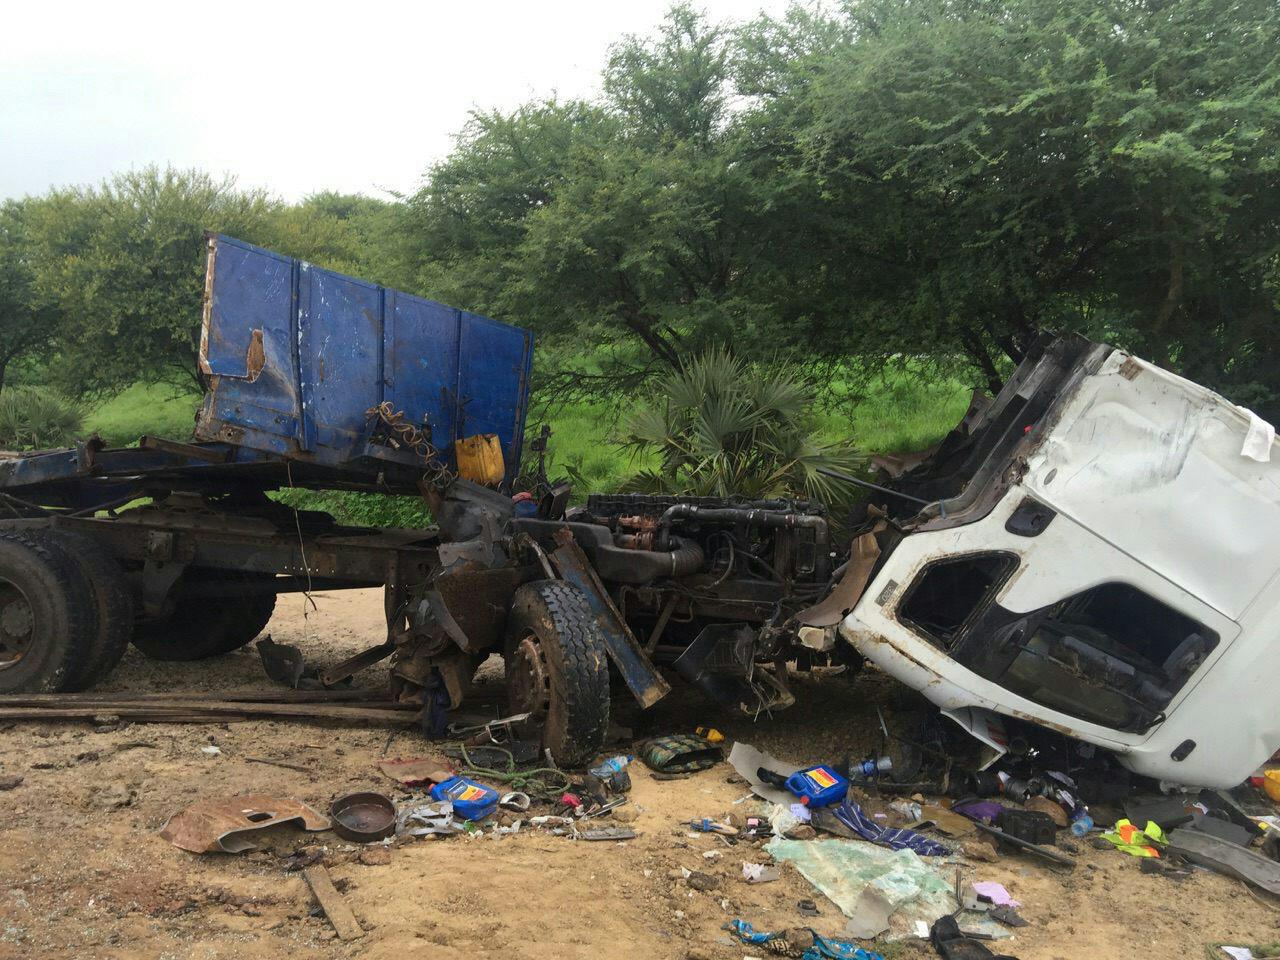 Tchad: Les accidents de circulation continent d'endeuiller des familles